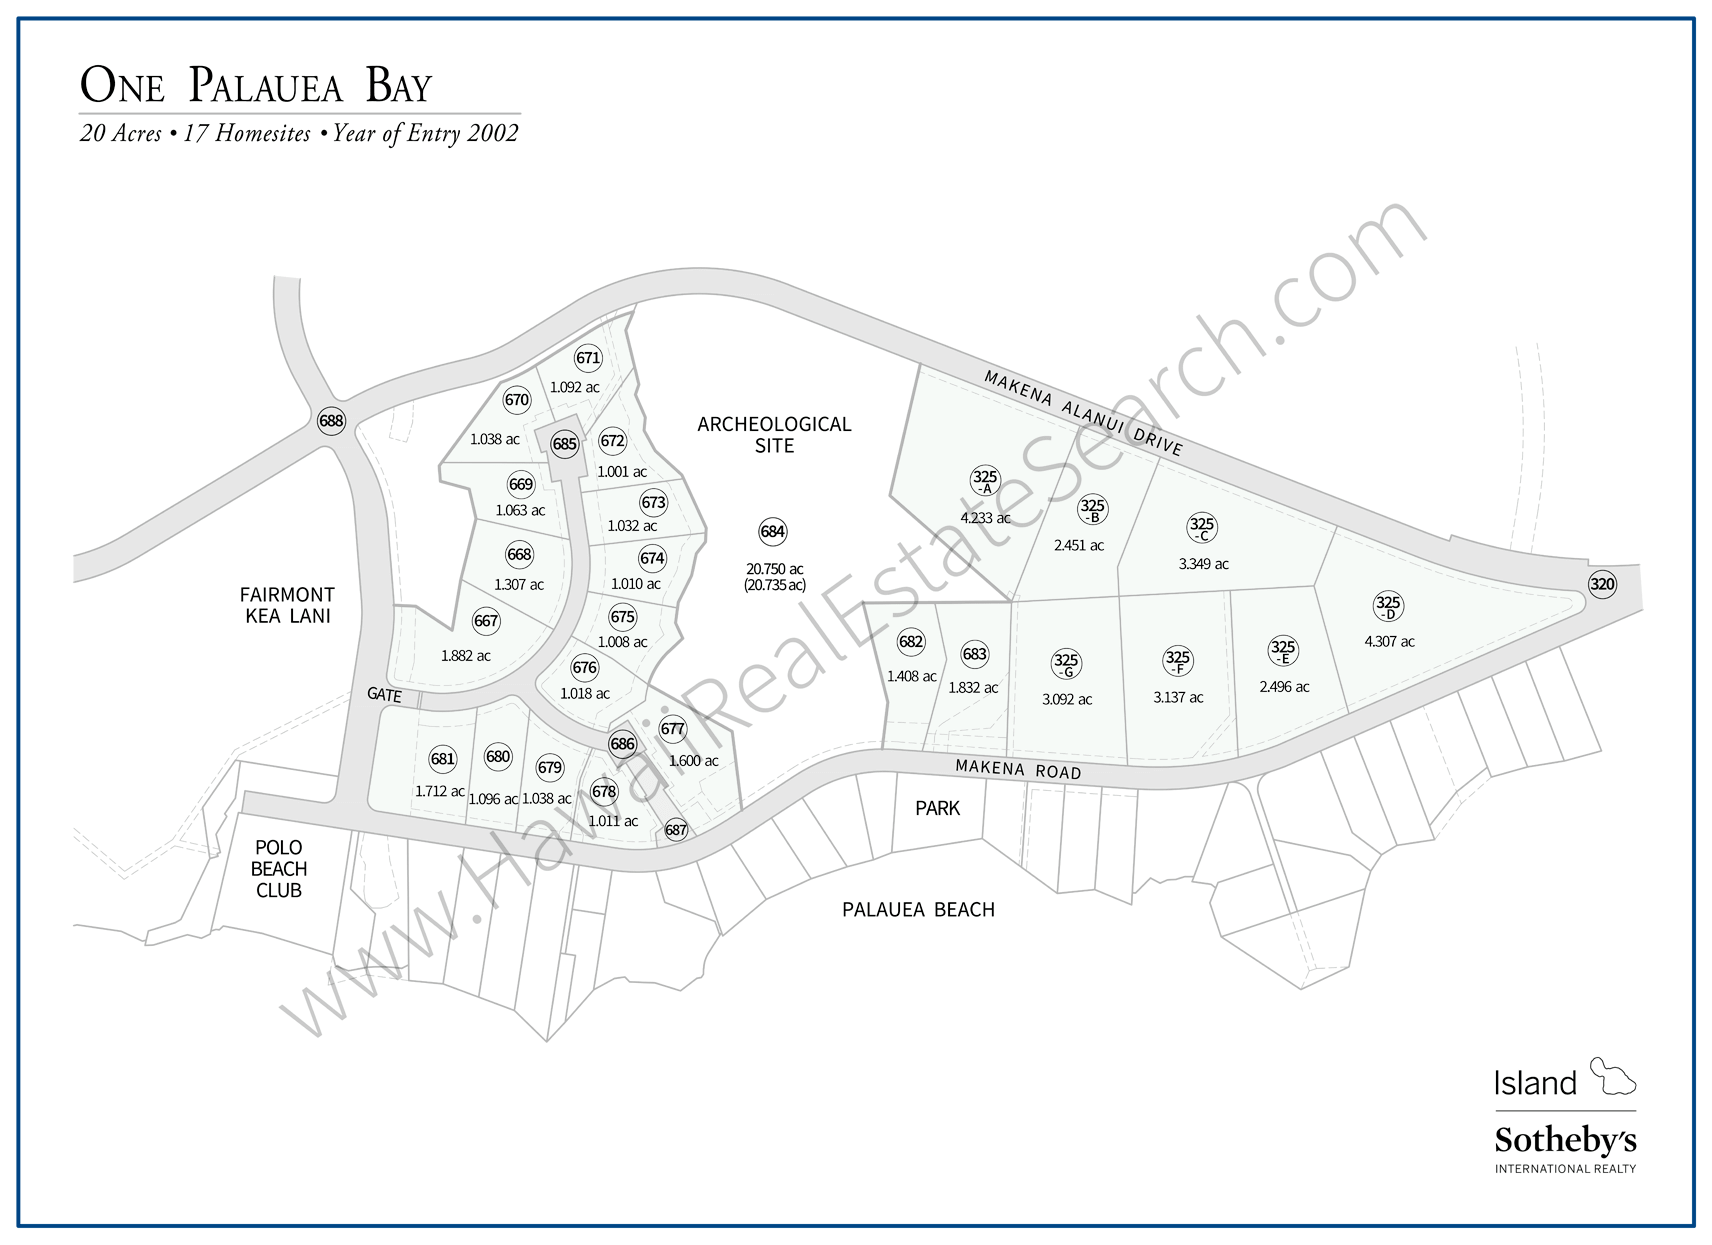 One Palauea Bay Map Updated